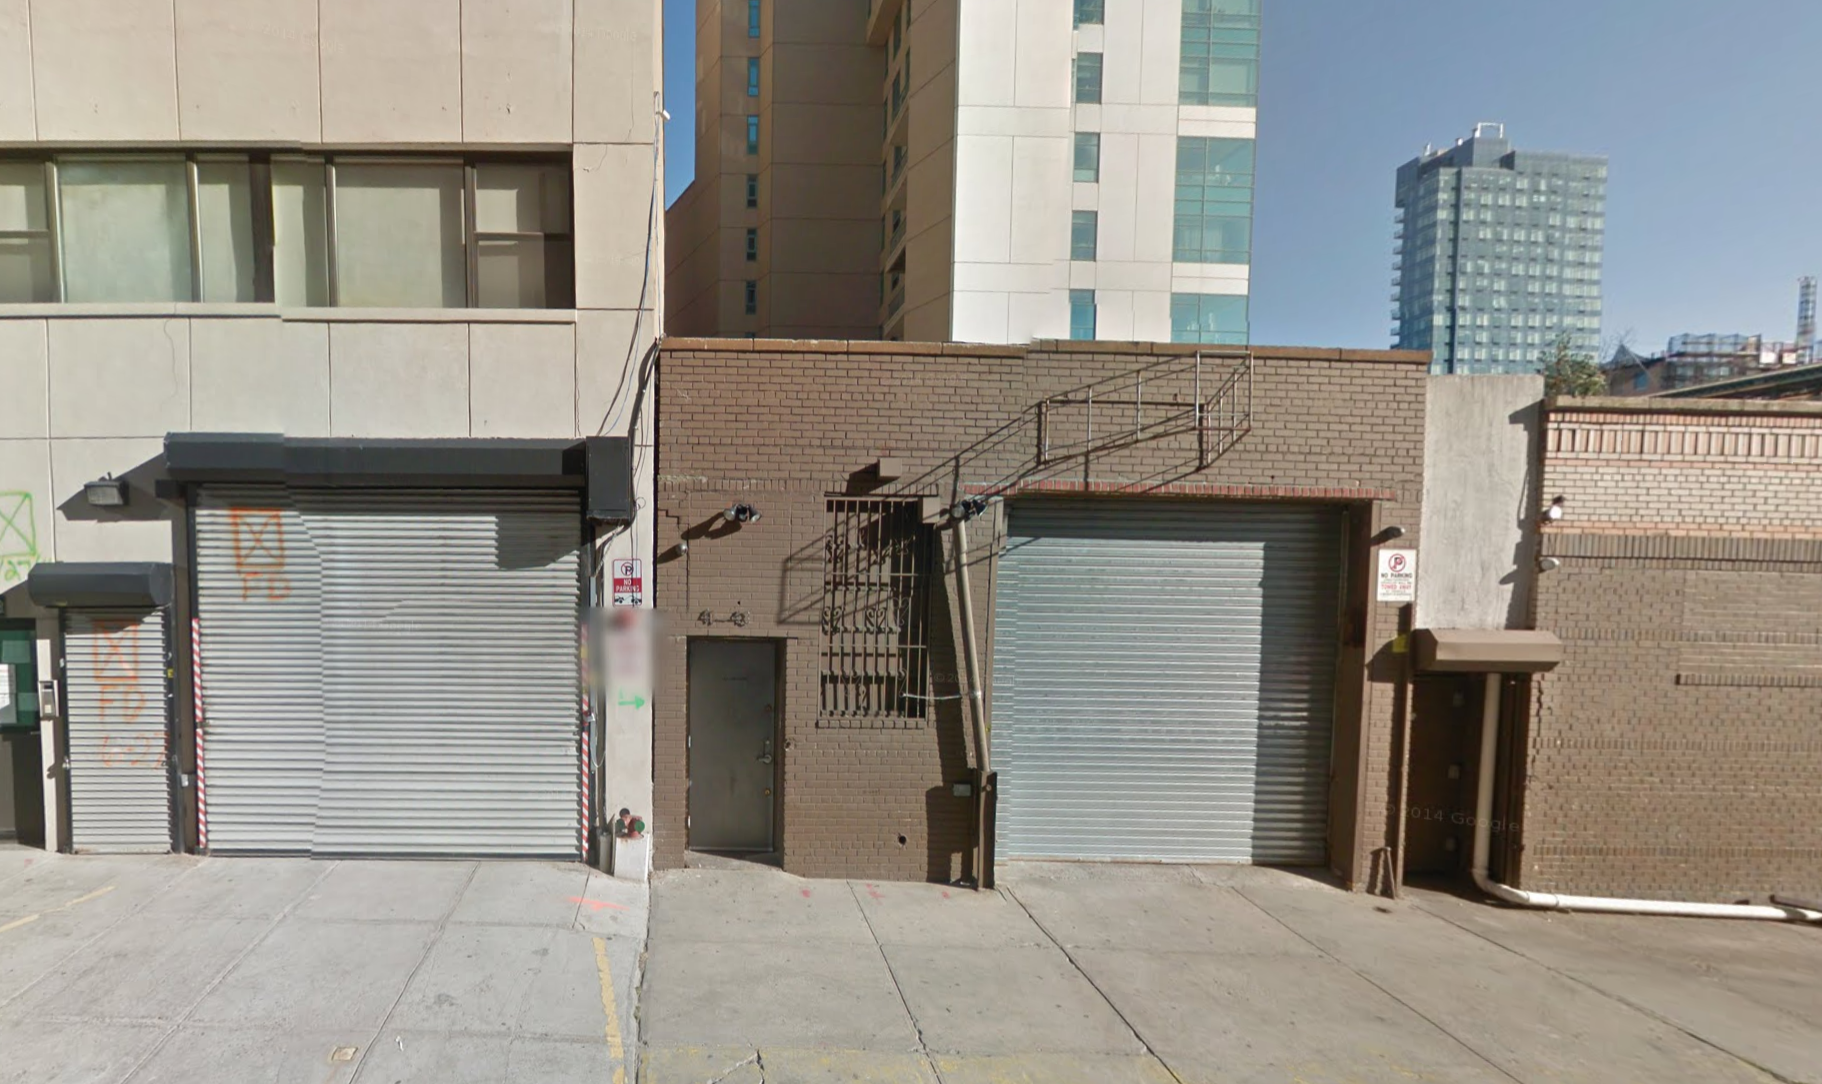 41-41 24th Street, image via Google Maps